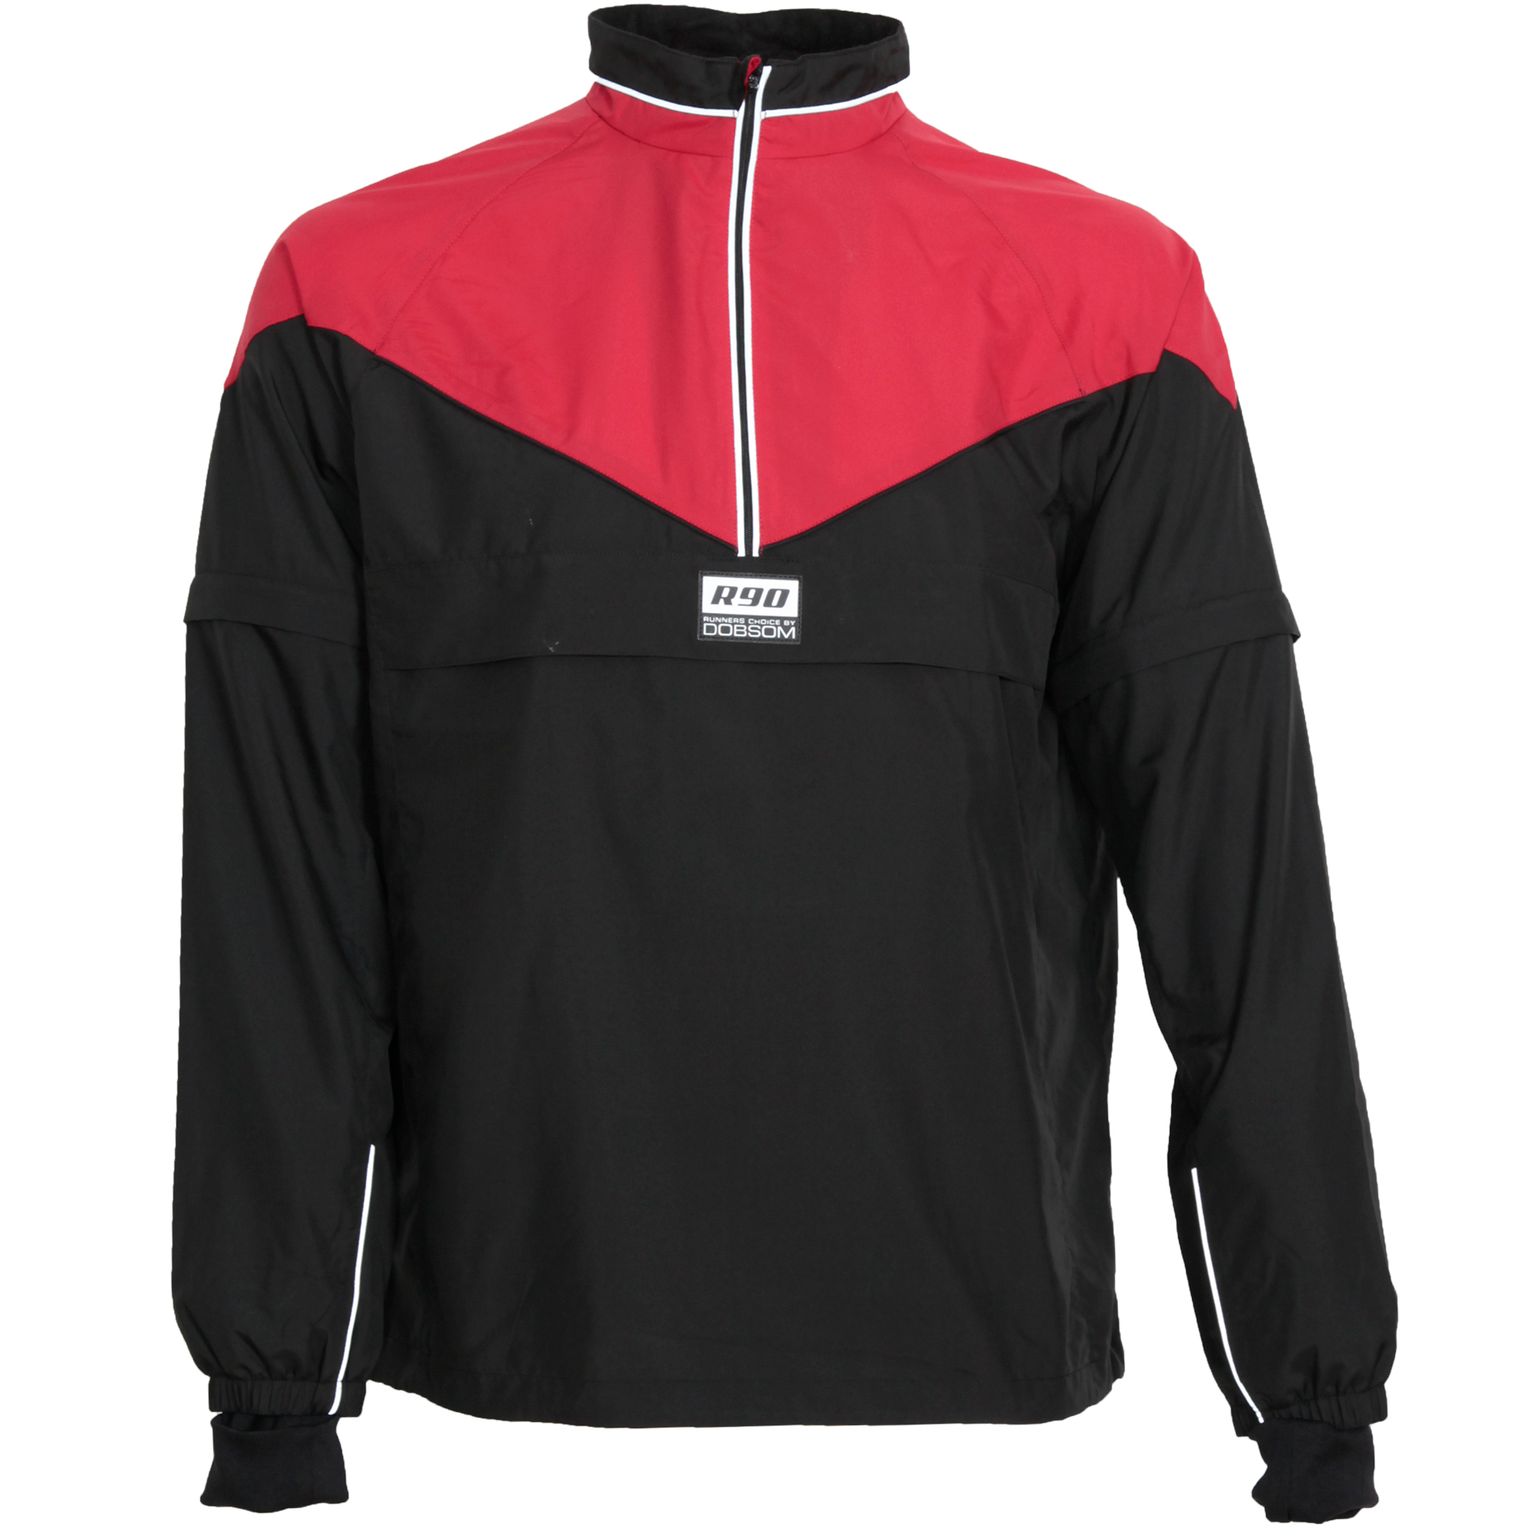 Dobsom Men's R90 Classic Jacket Black/Red